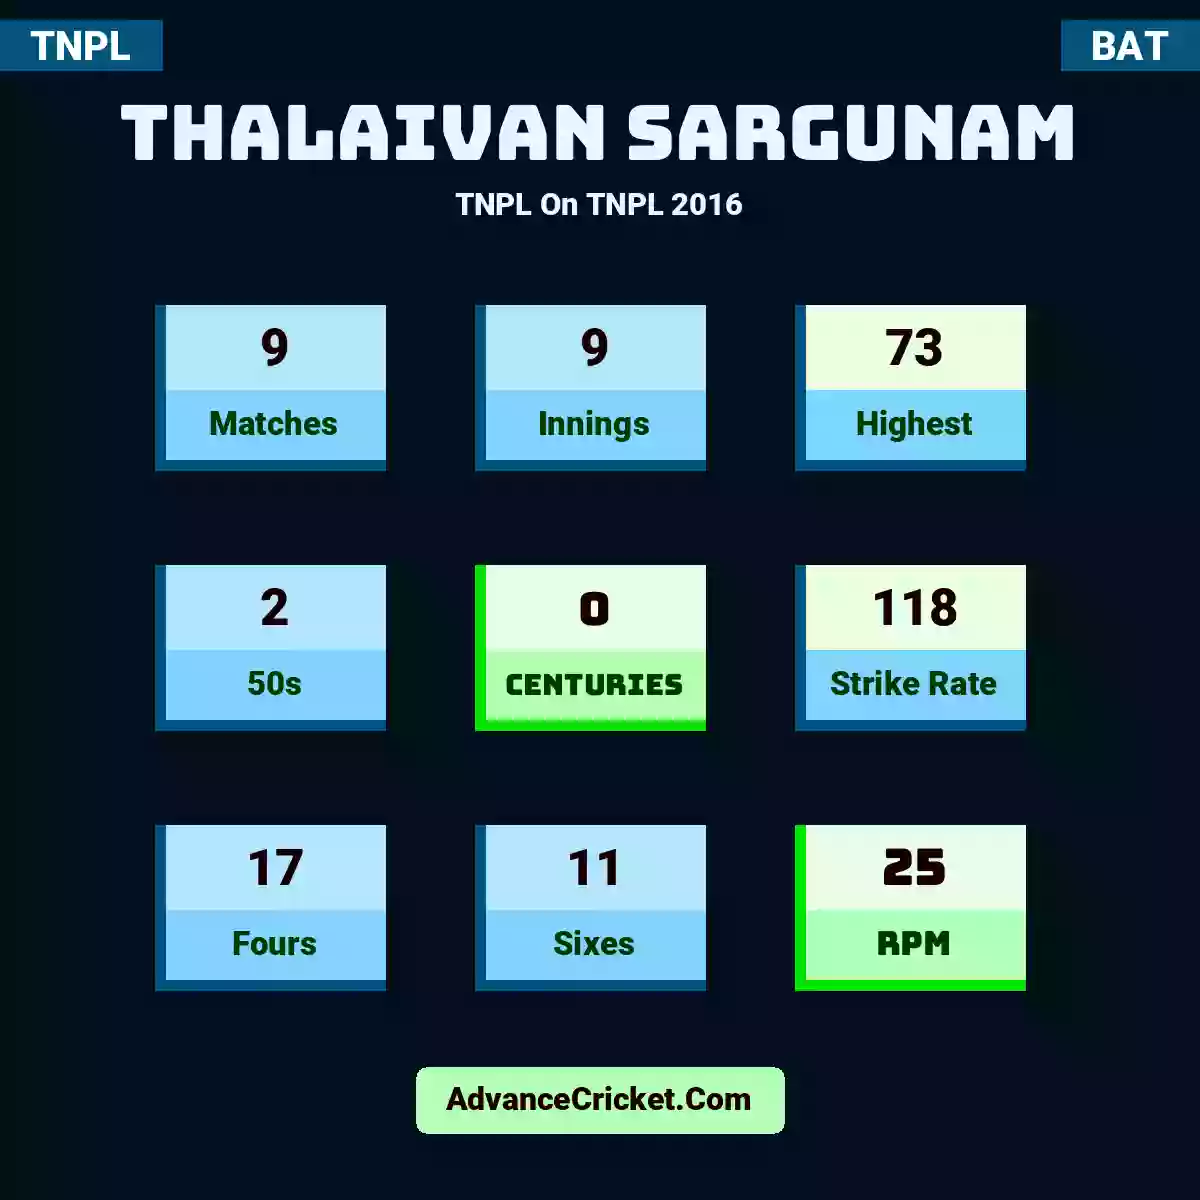 Thalaivan Sargunam TNPL  On TNPL 2016, Thalaivan Sargunam played 9 matches, scored 73 runs as highest, 2 half-centuries, and 0 centuries, with a strike rate of 118. T.Sargunam hit 17 fours and 11 sixes, with an RPM of 25.